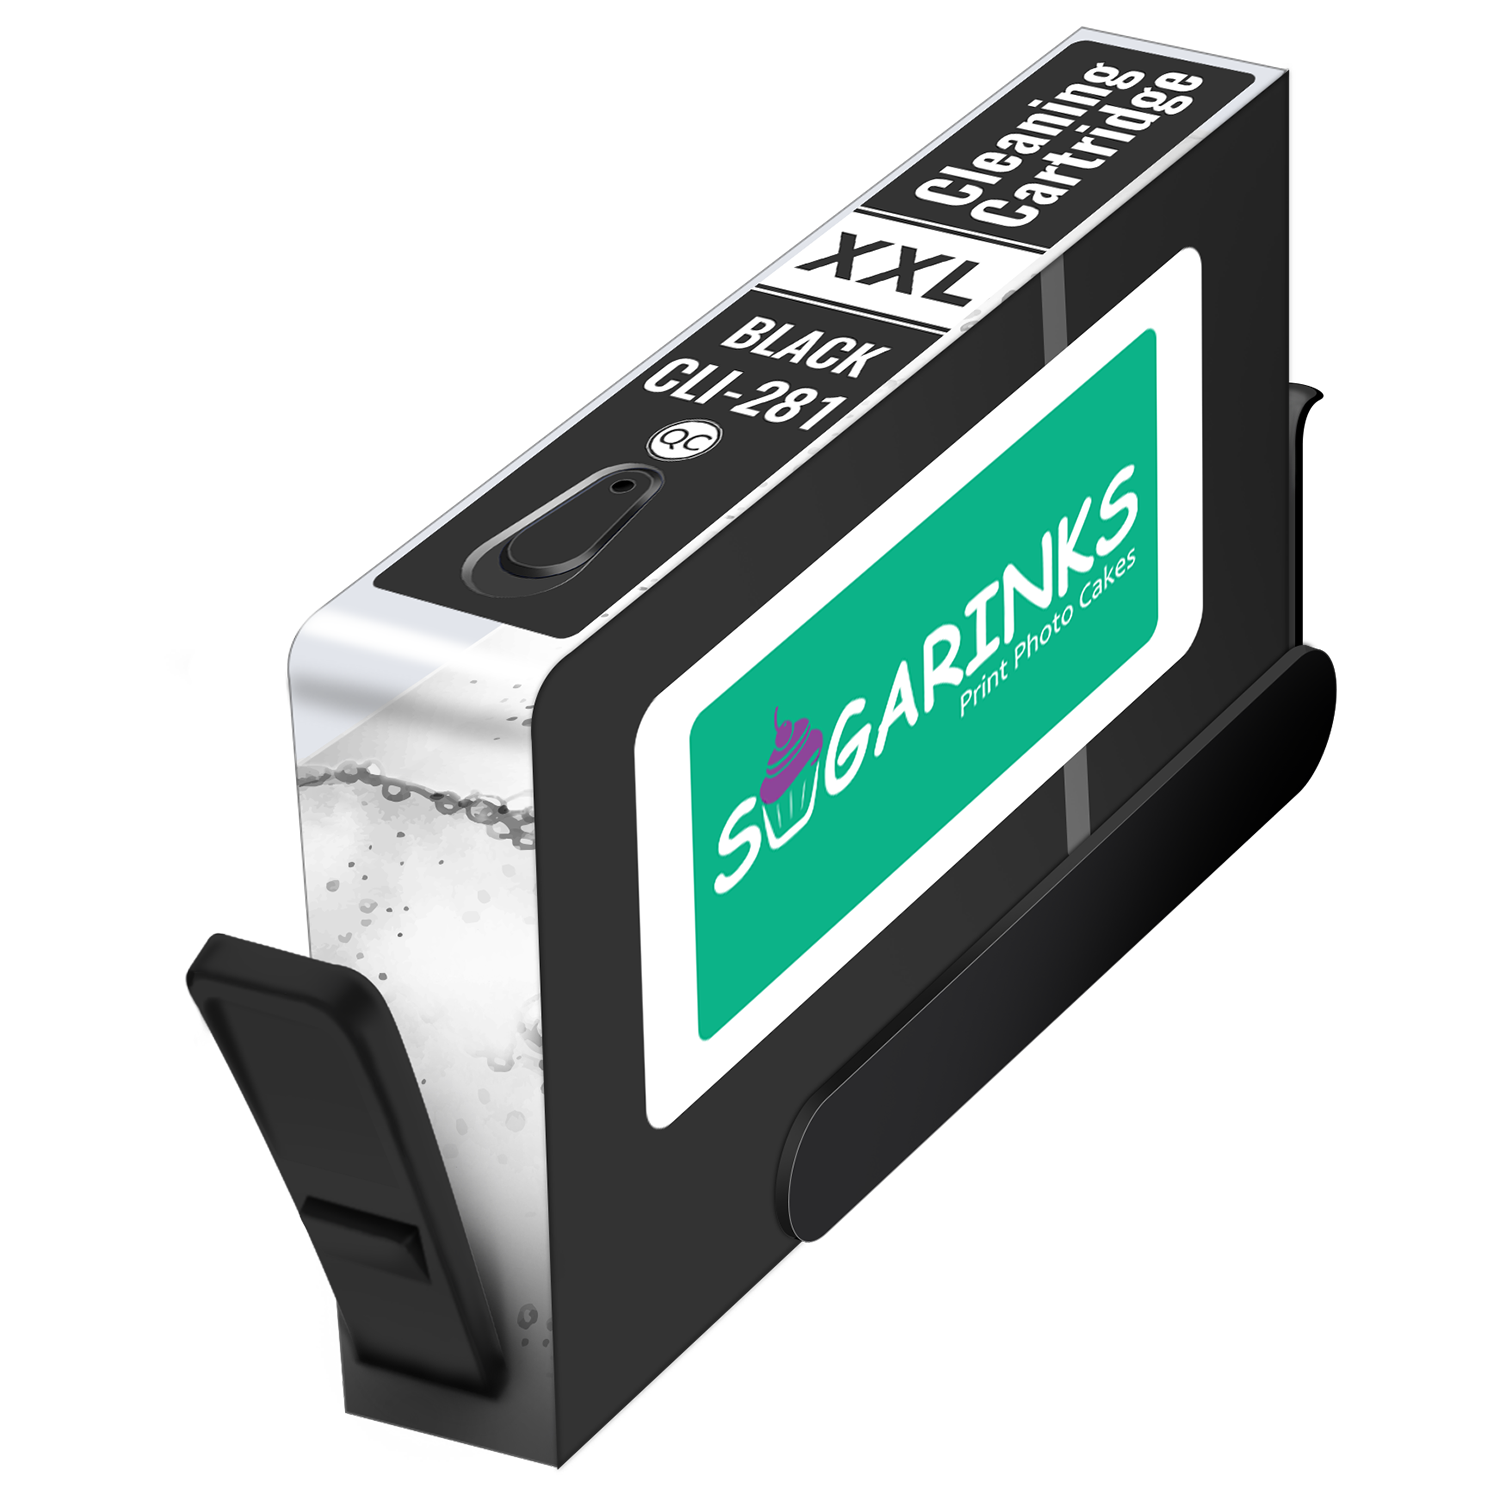 Sugarinks Edible Cleaning Cartridge CLI-281XL for Canon Edible Printer – Black 